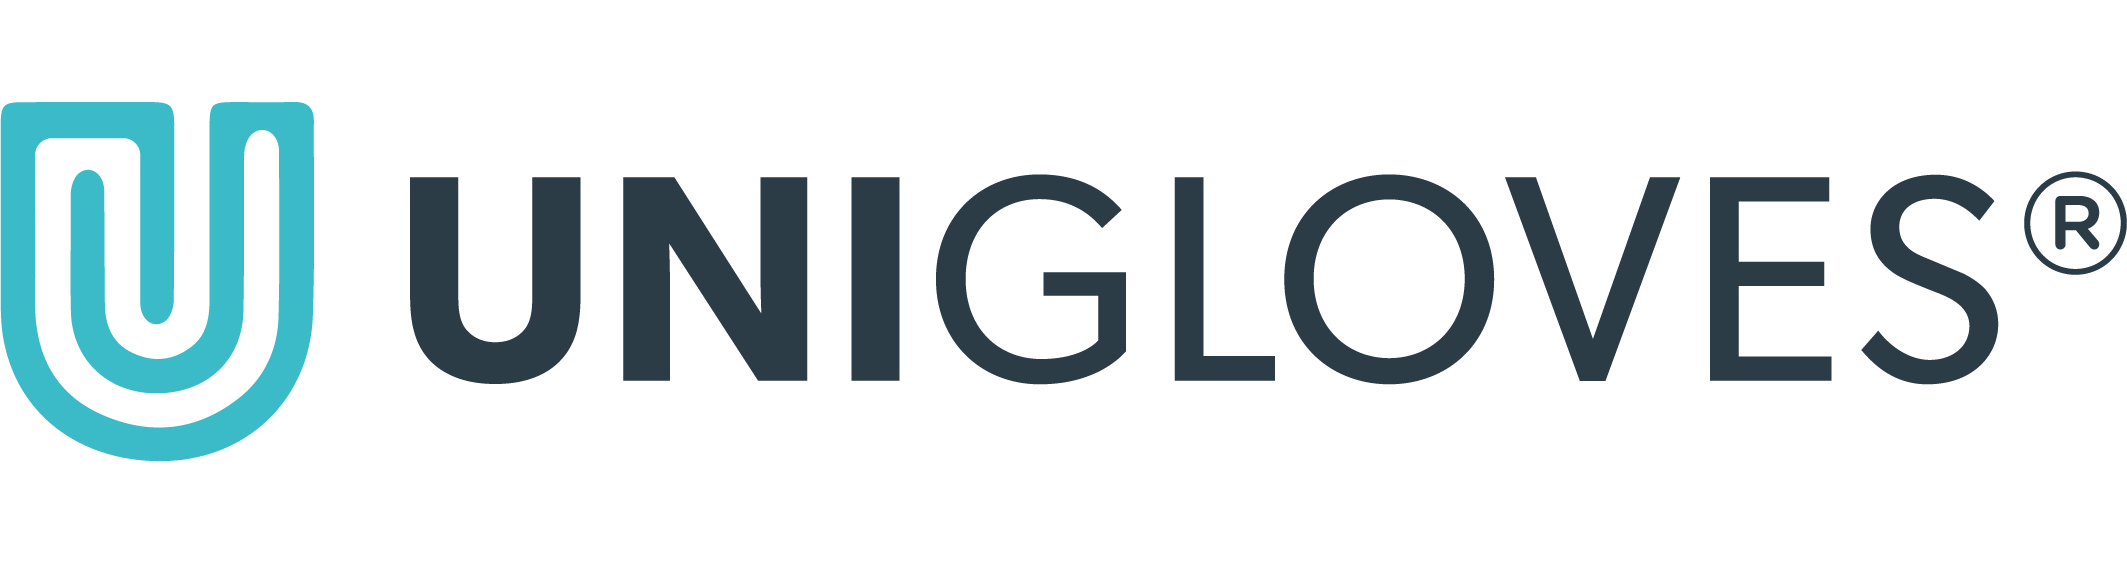 Unigloves logo bild